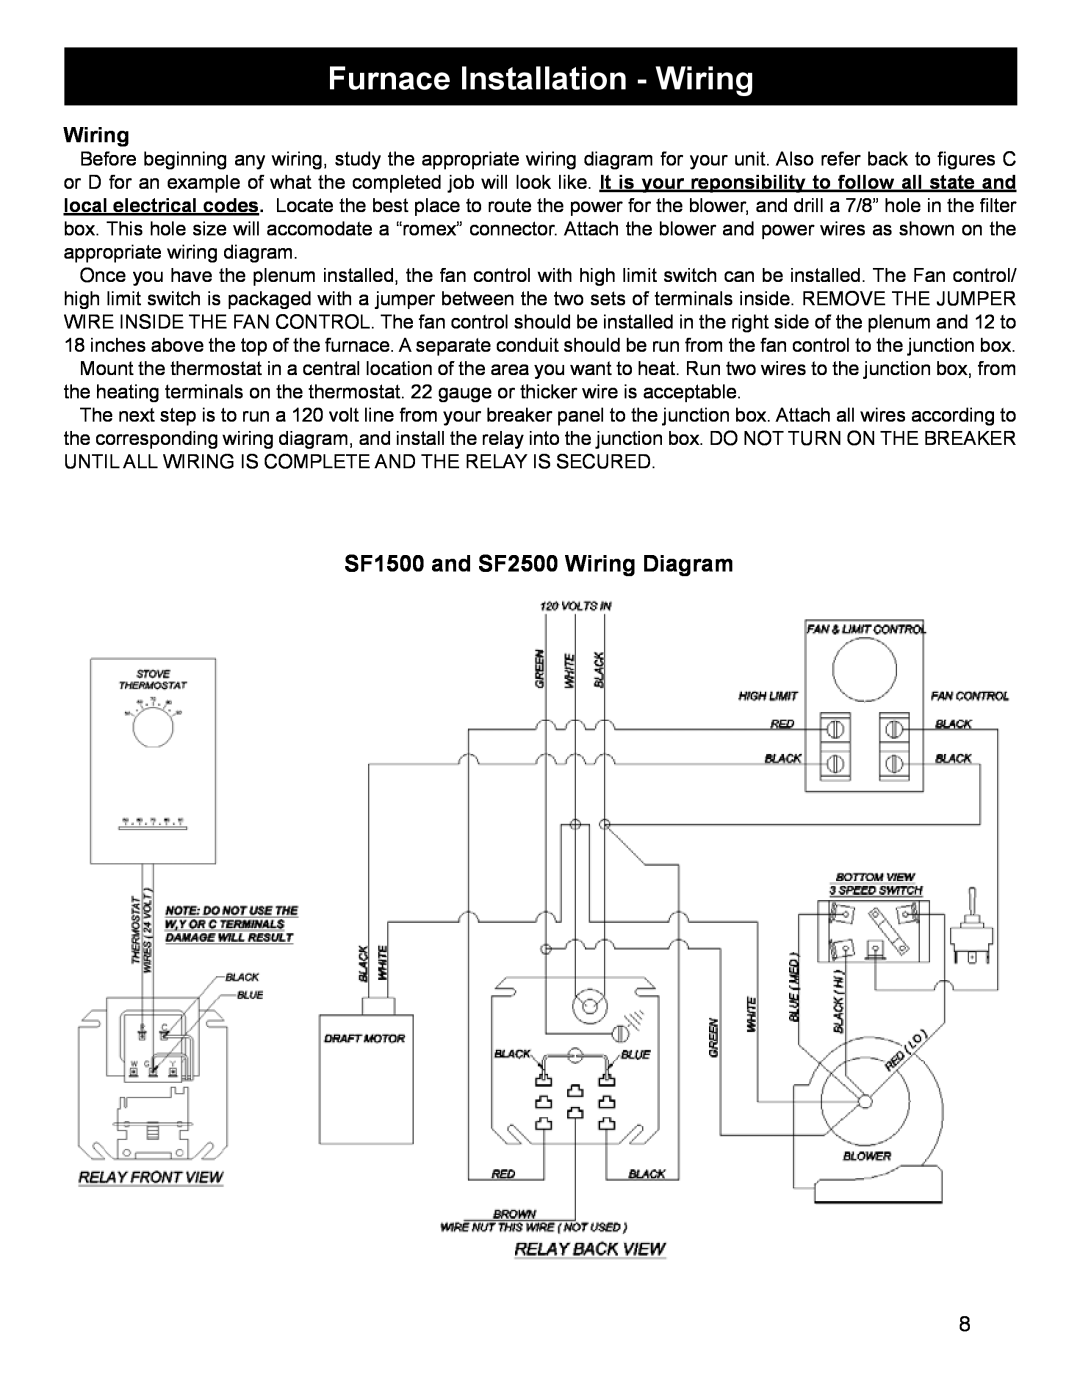 Harman Stove Company SF1500A manual Furnace Installation - Wiring, SF1500 and SF2500 Wiring Diagram 